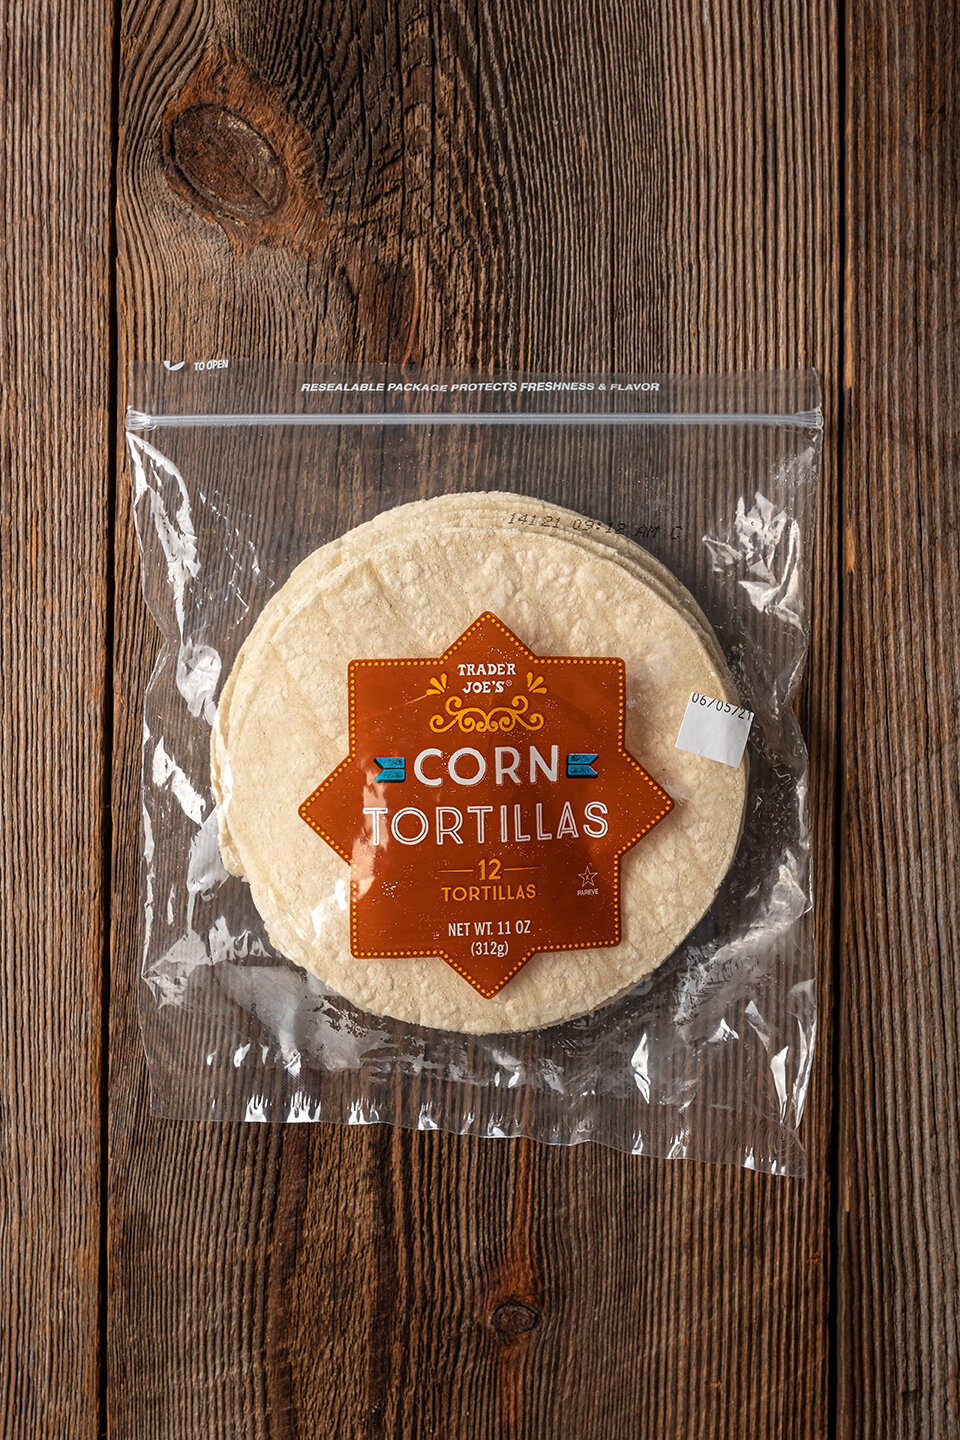 Corn tortillas $1.29